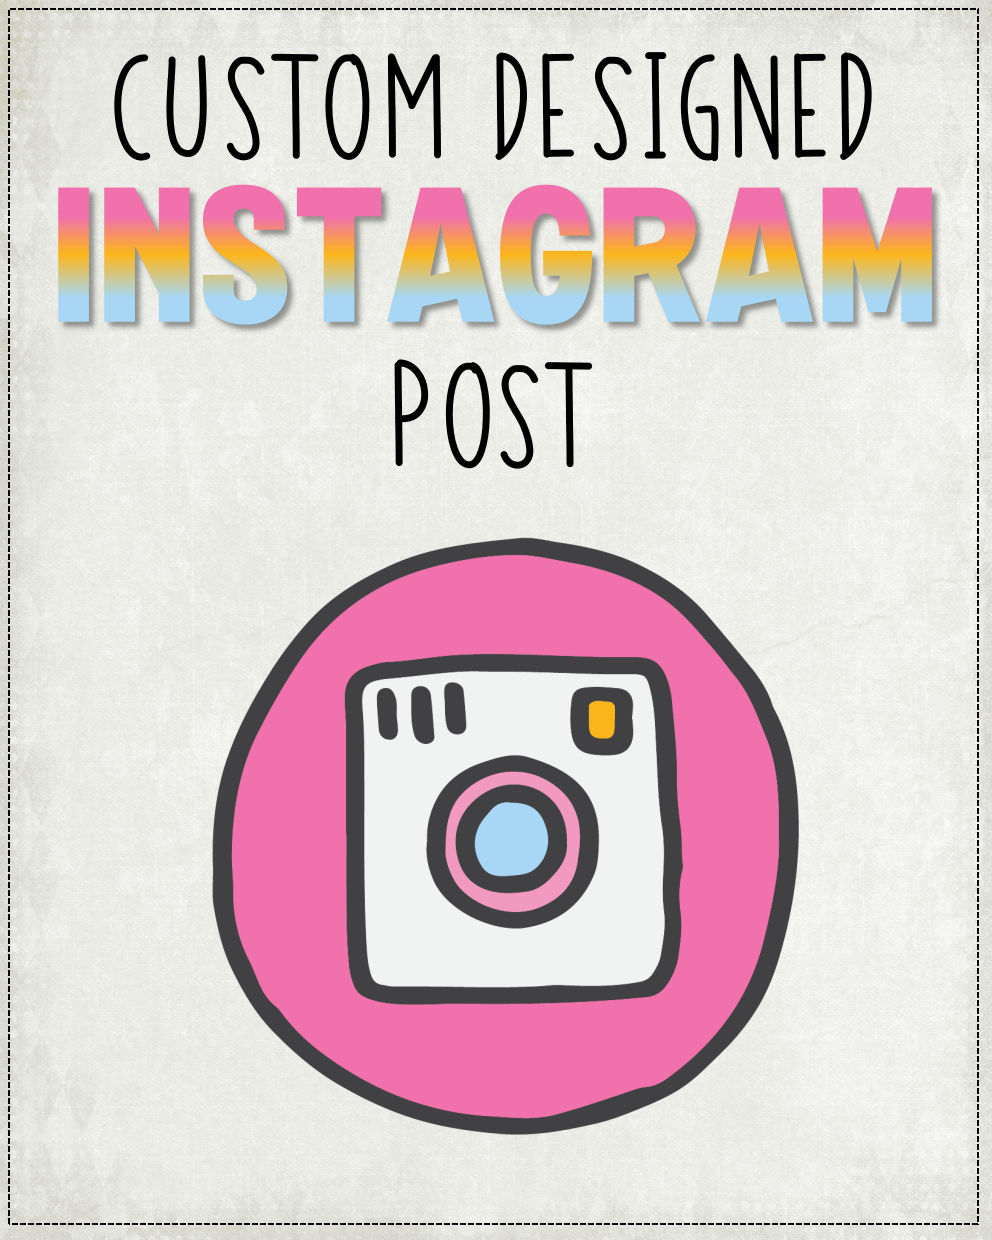 CUSTOM DESIGNED:  Instagram Post